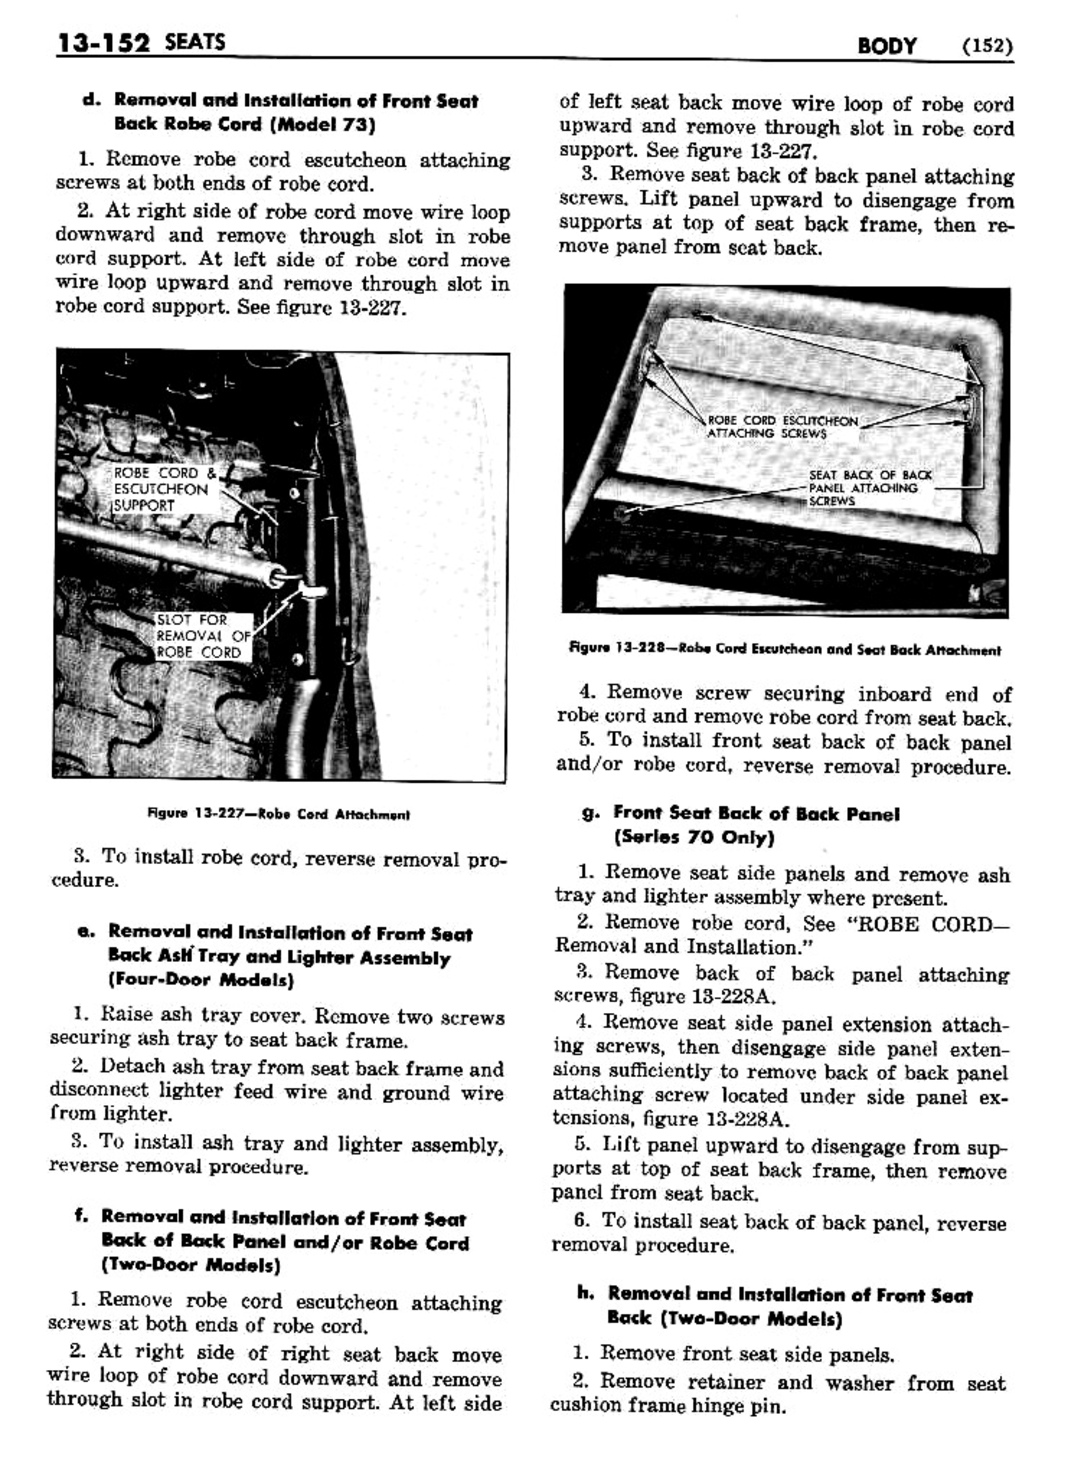 n_1957 Buick Body Service Manual-154-154.jpg